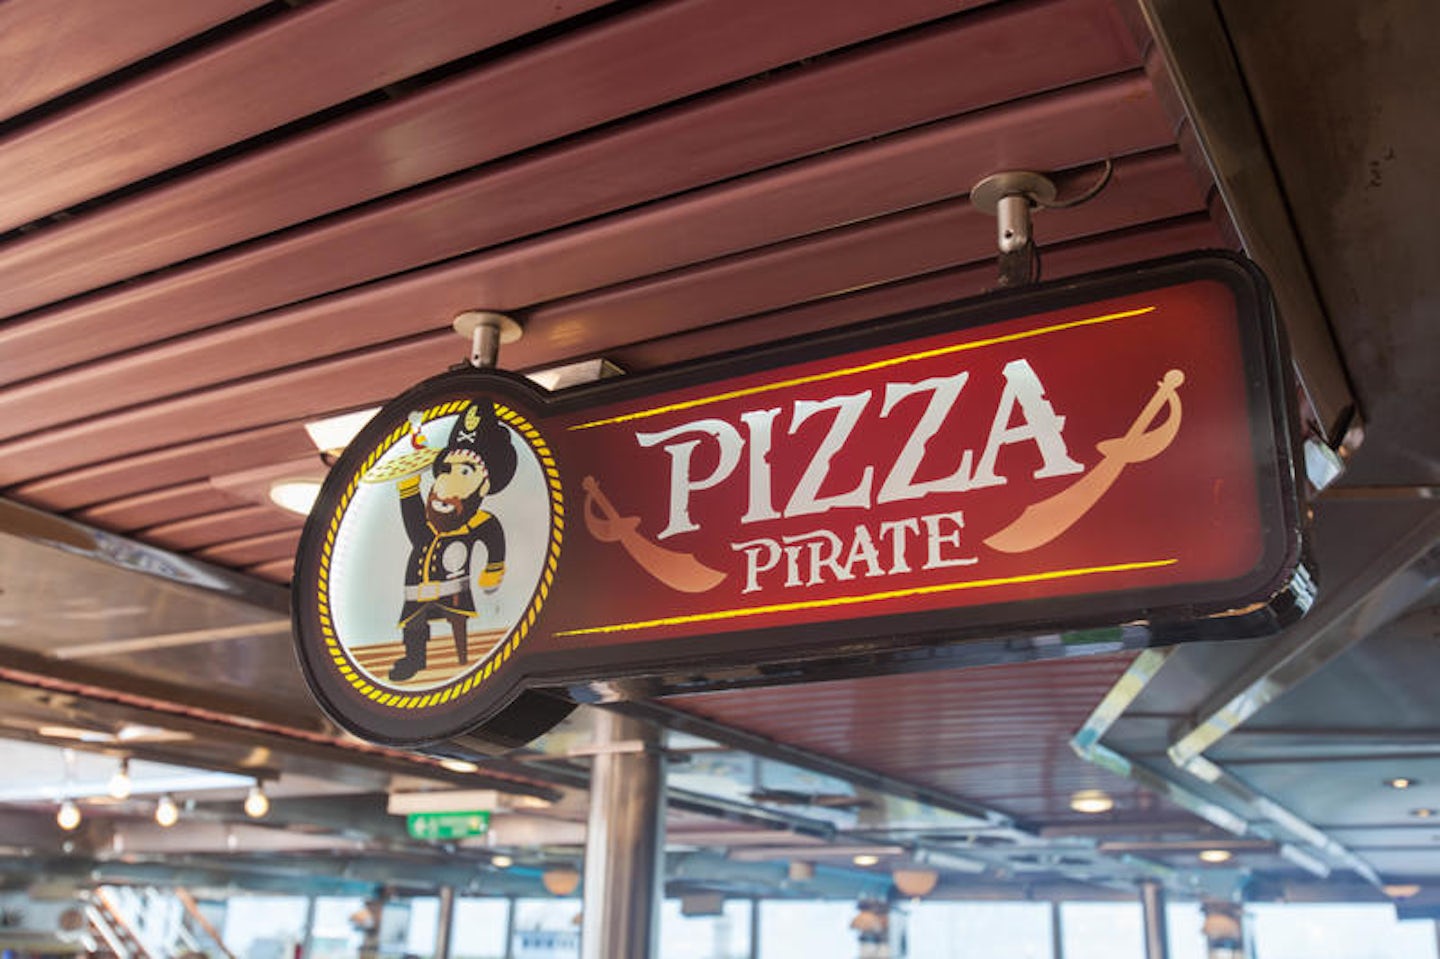 Pizza Pirate on Carnival Valor